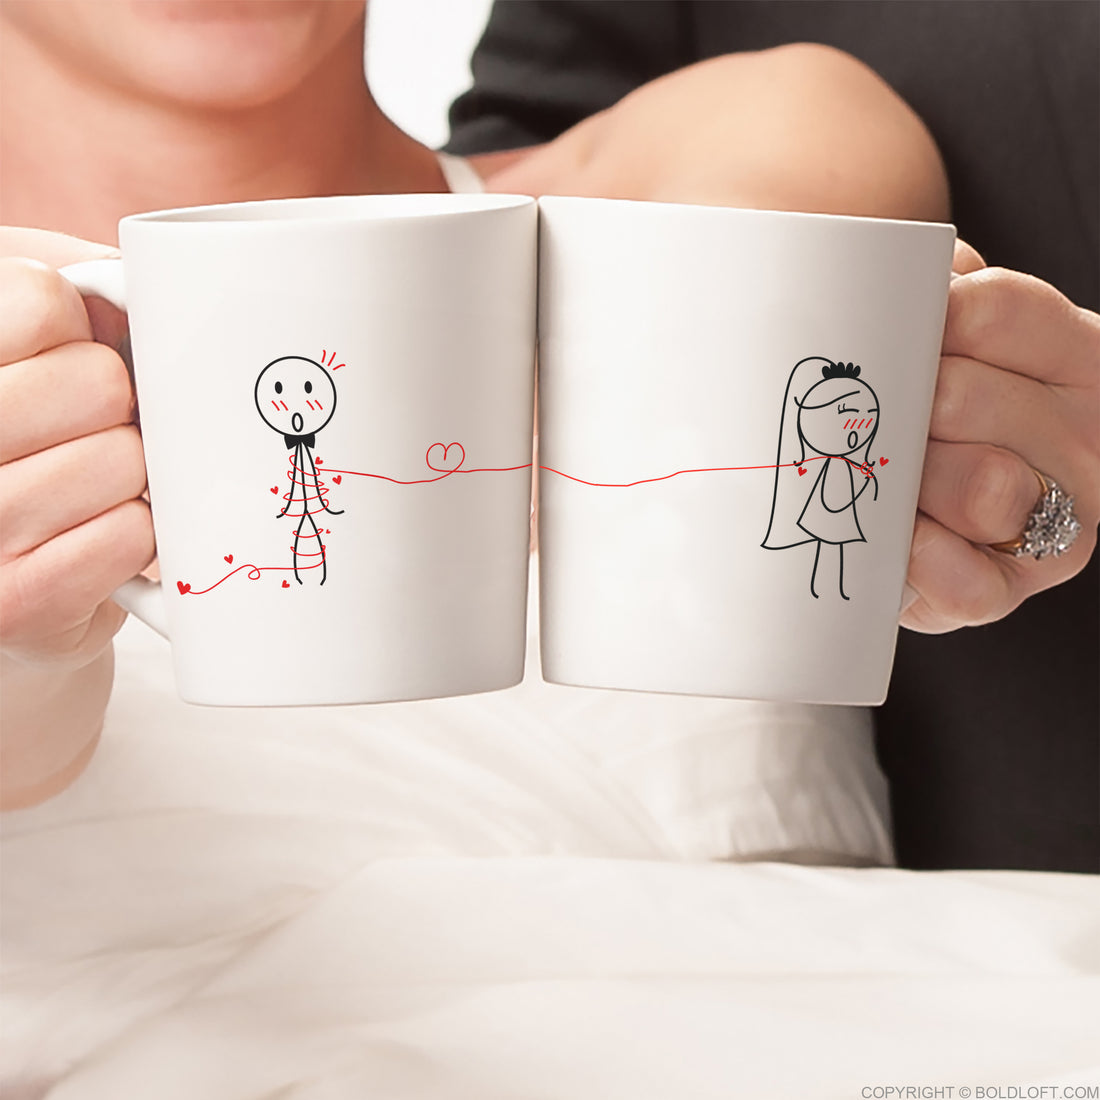 BoldLoft Tie the Knot Wedding Mug Set for Bride and Groom. Matching Couple Mugs for the Newlyweds.